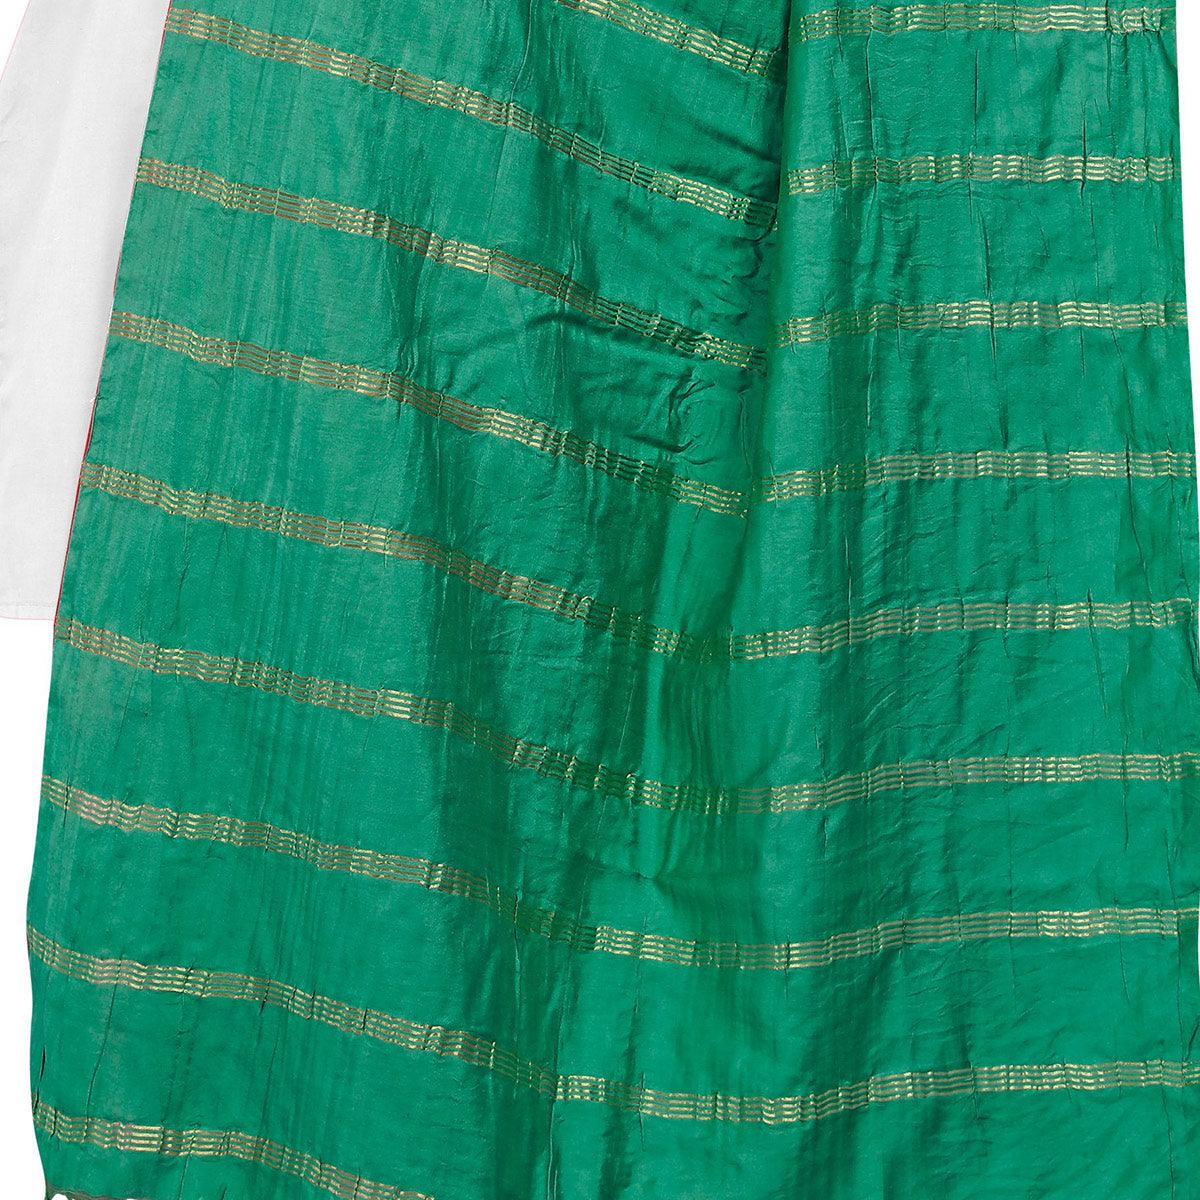 Flamboyant Green Colored Festive Wear Cotton Dupatta - Peachmode